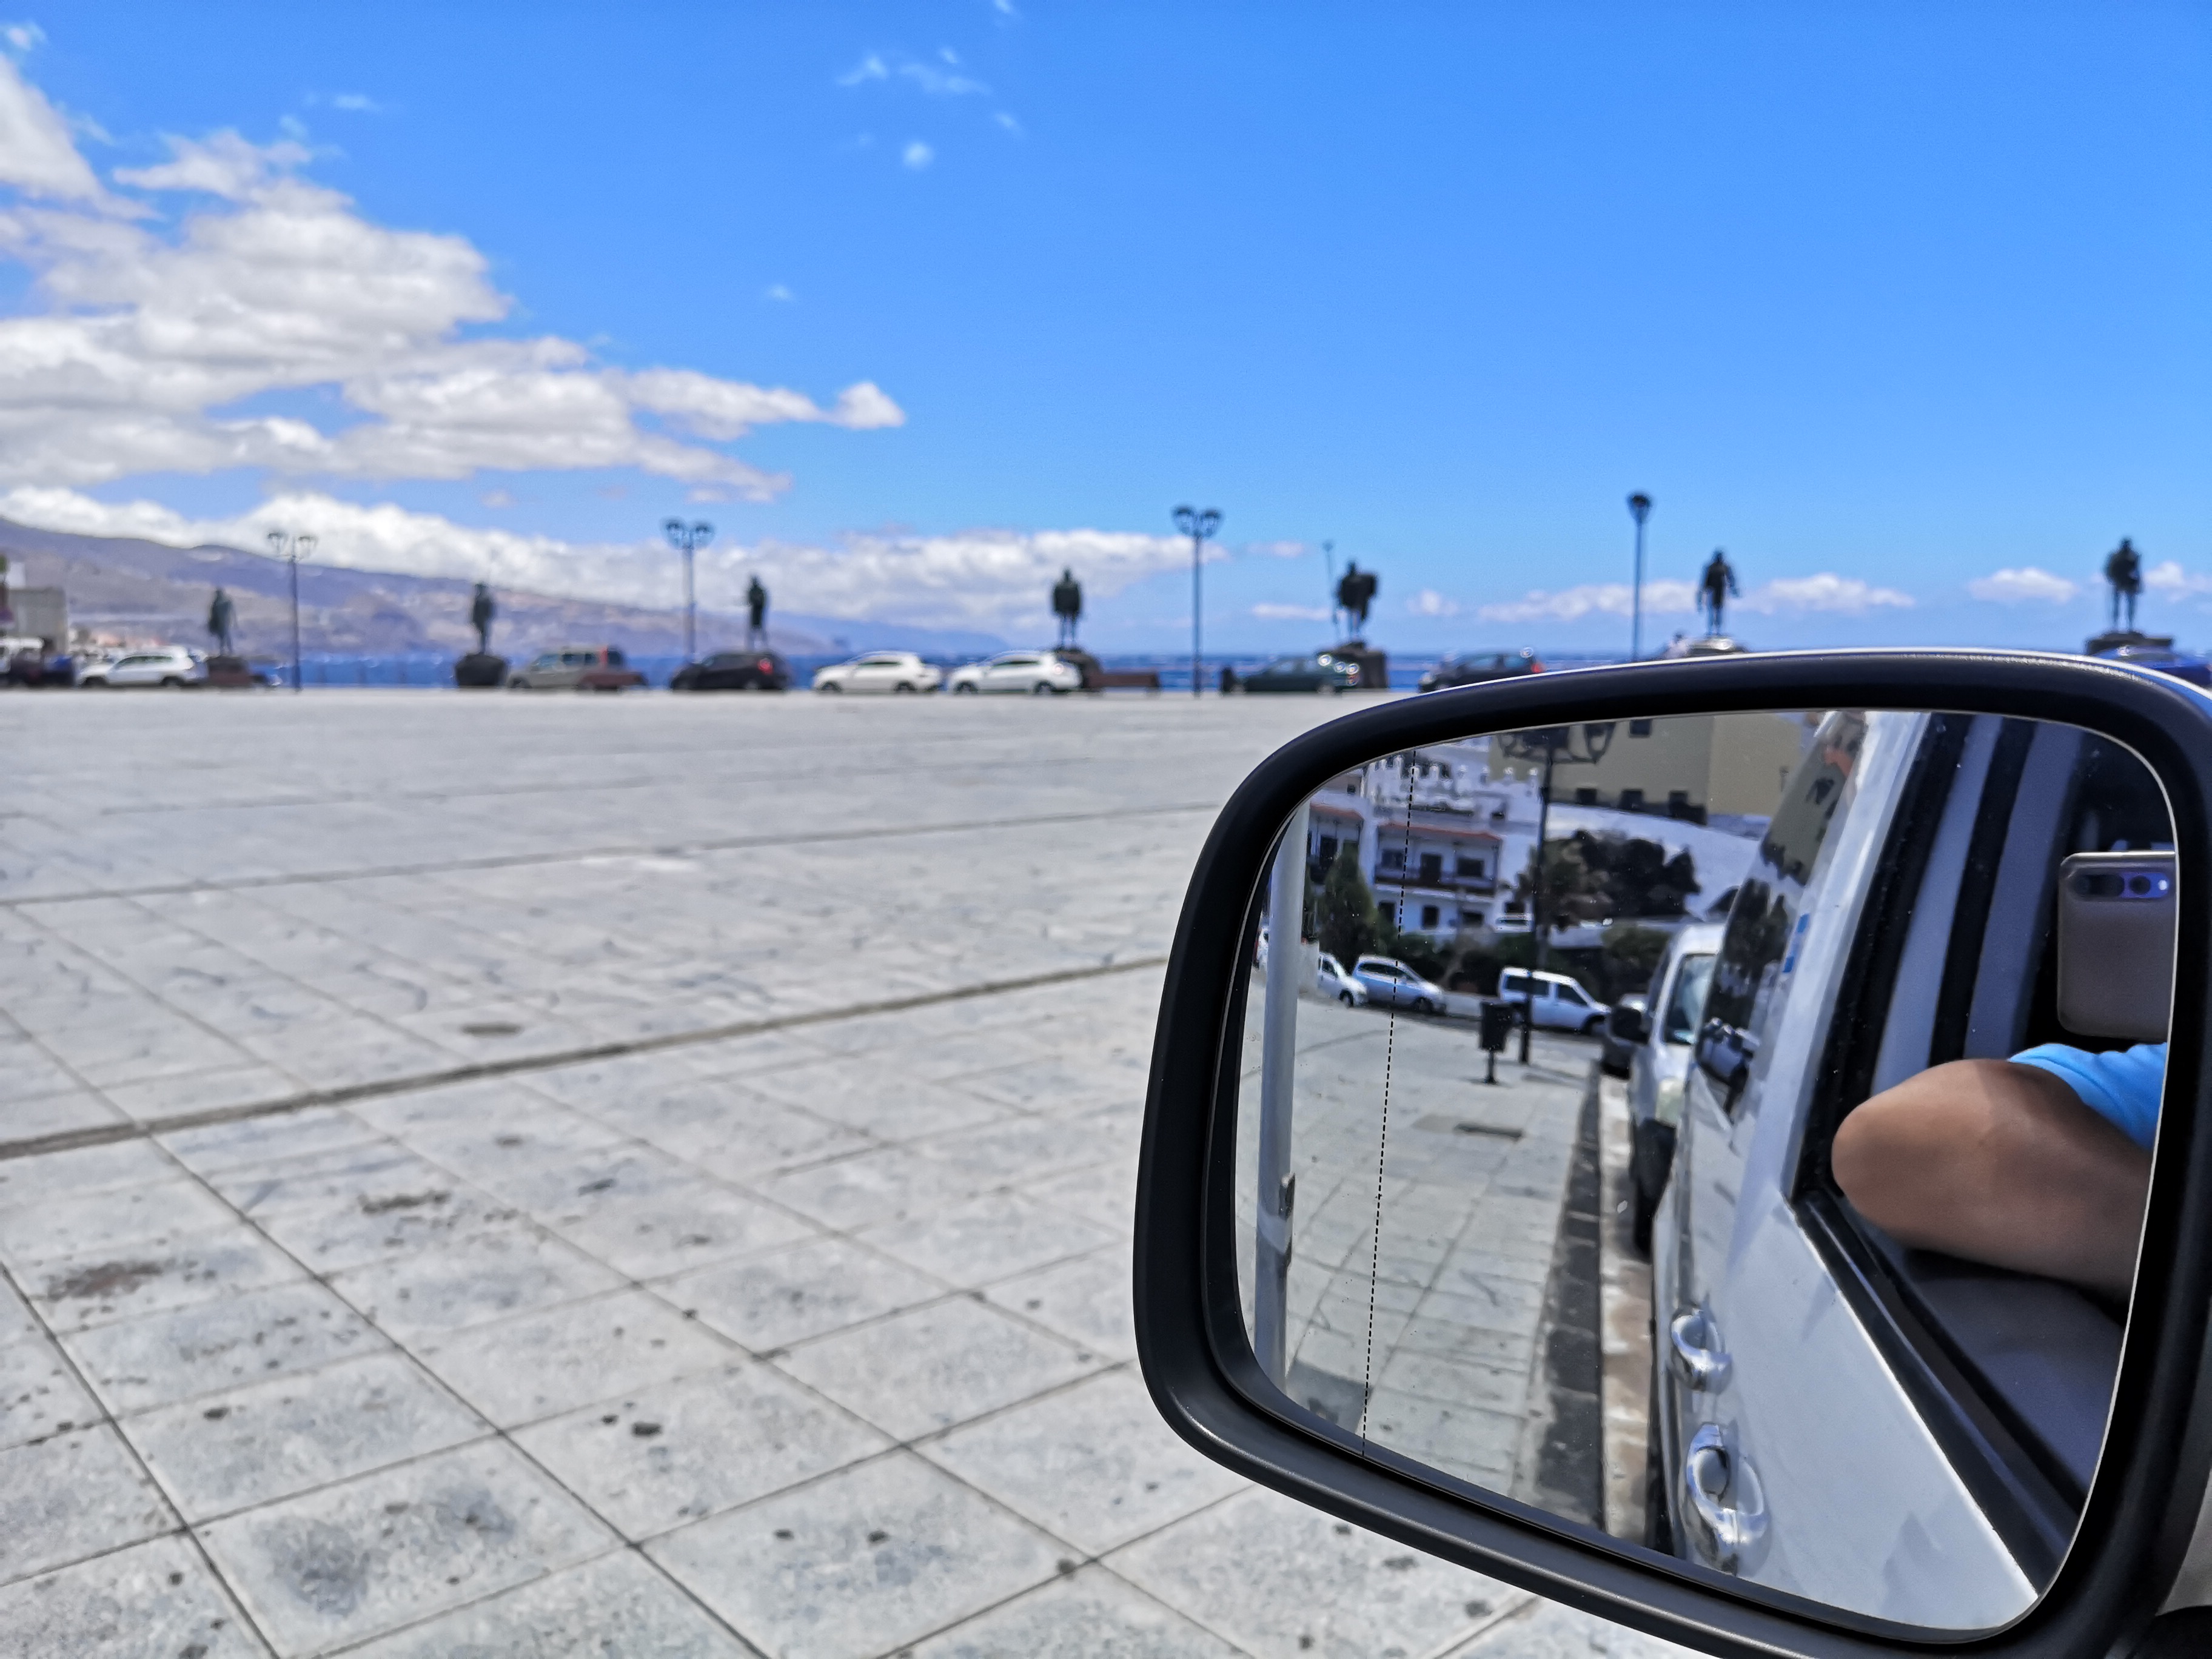 Fotos de Taxistenerife, Adaptado en Tenerife